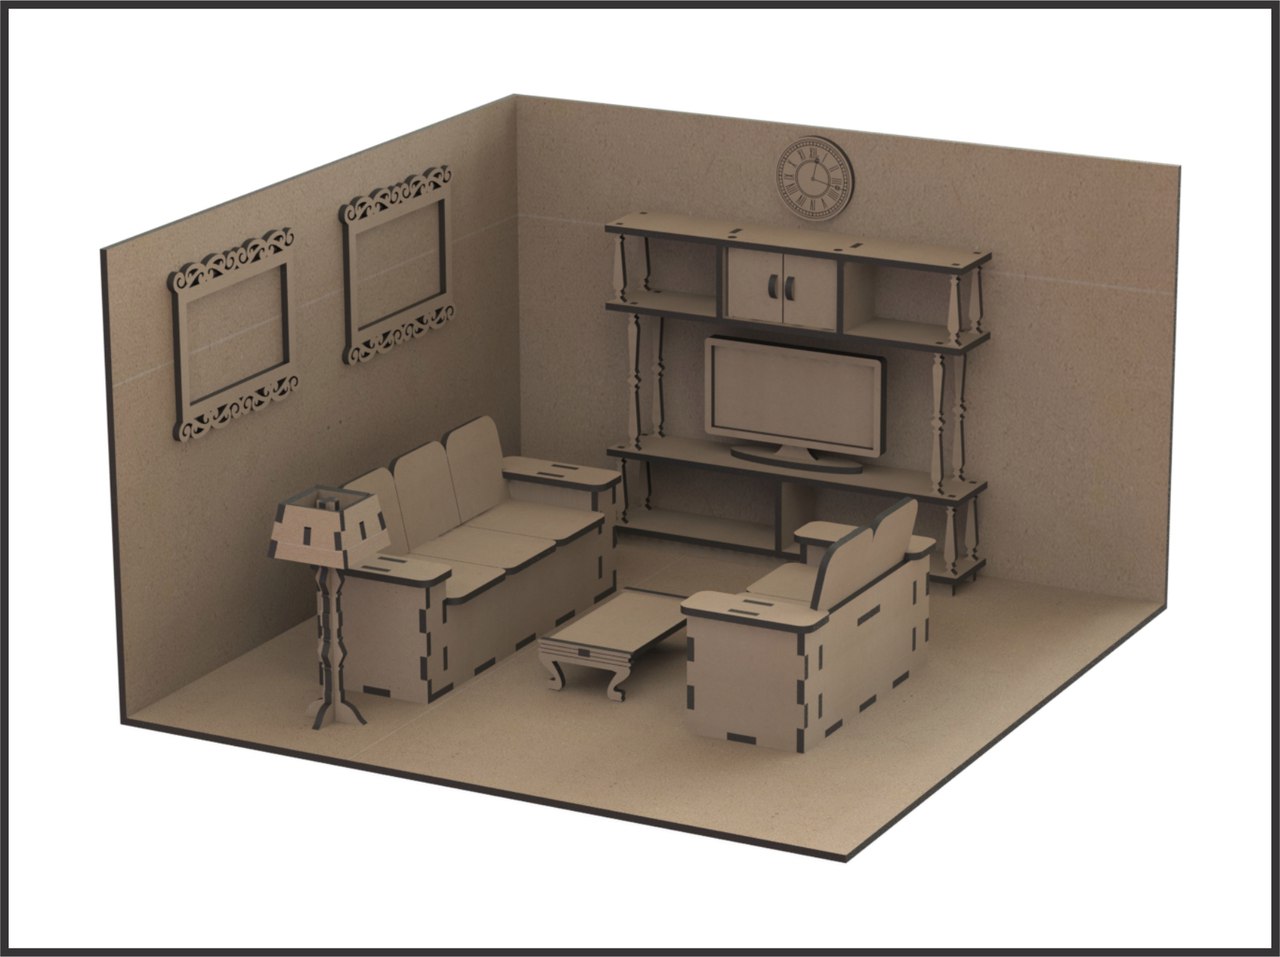 Laser Cut Miniature Dollhouse Furniture DXF File